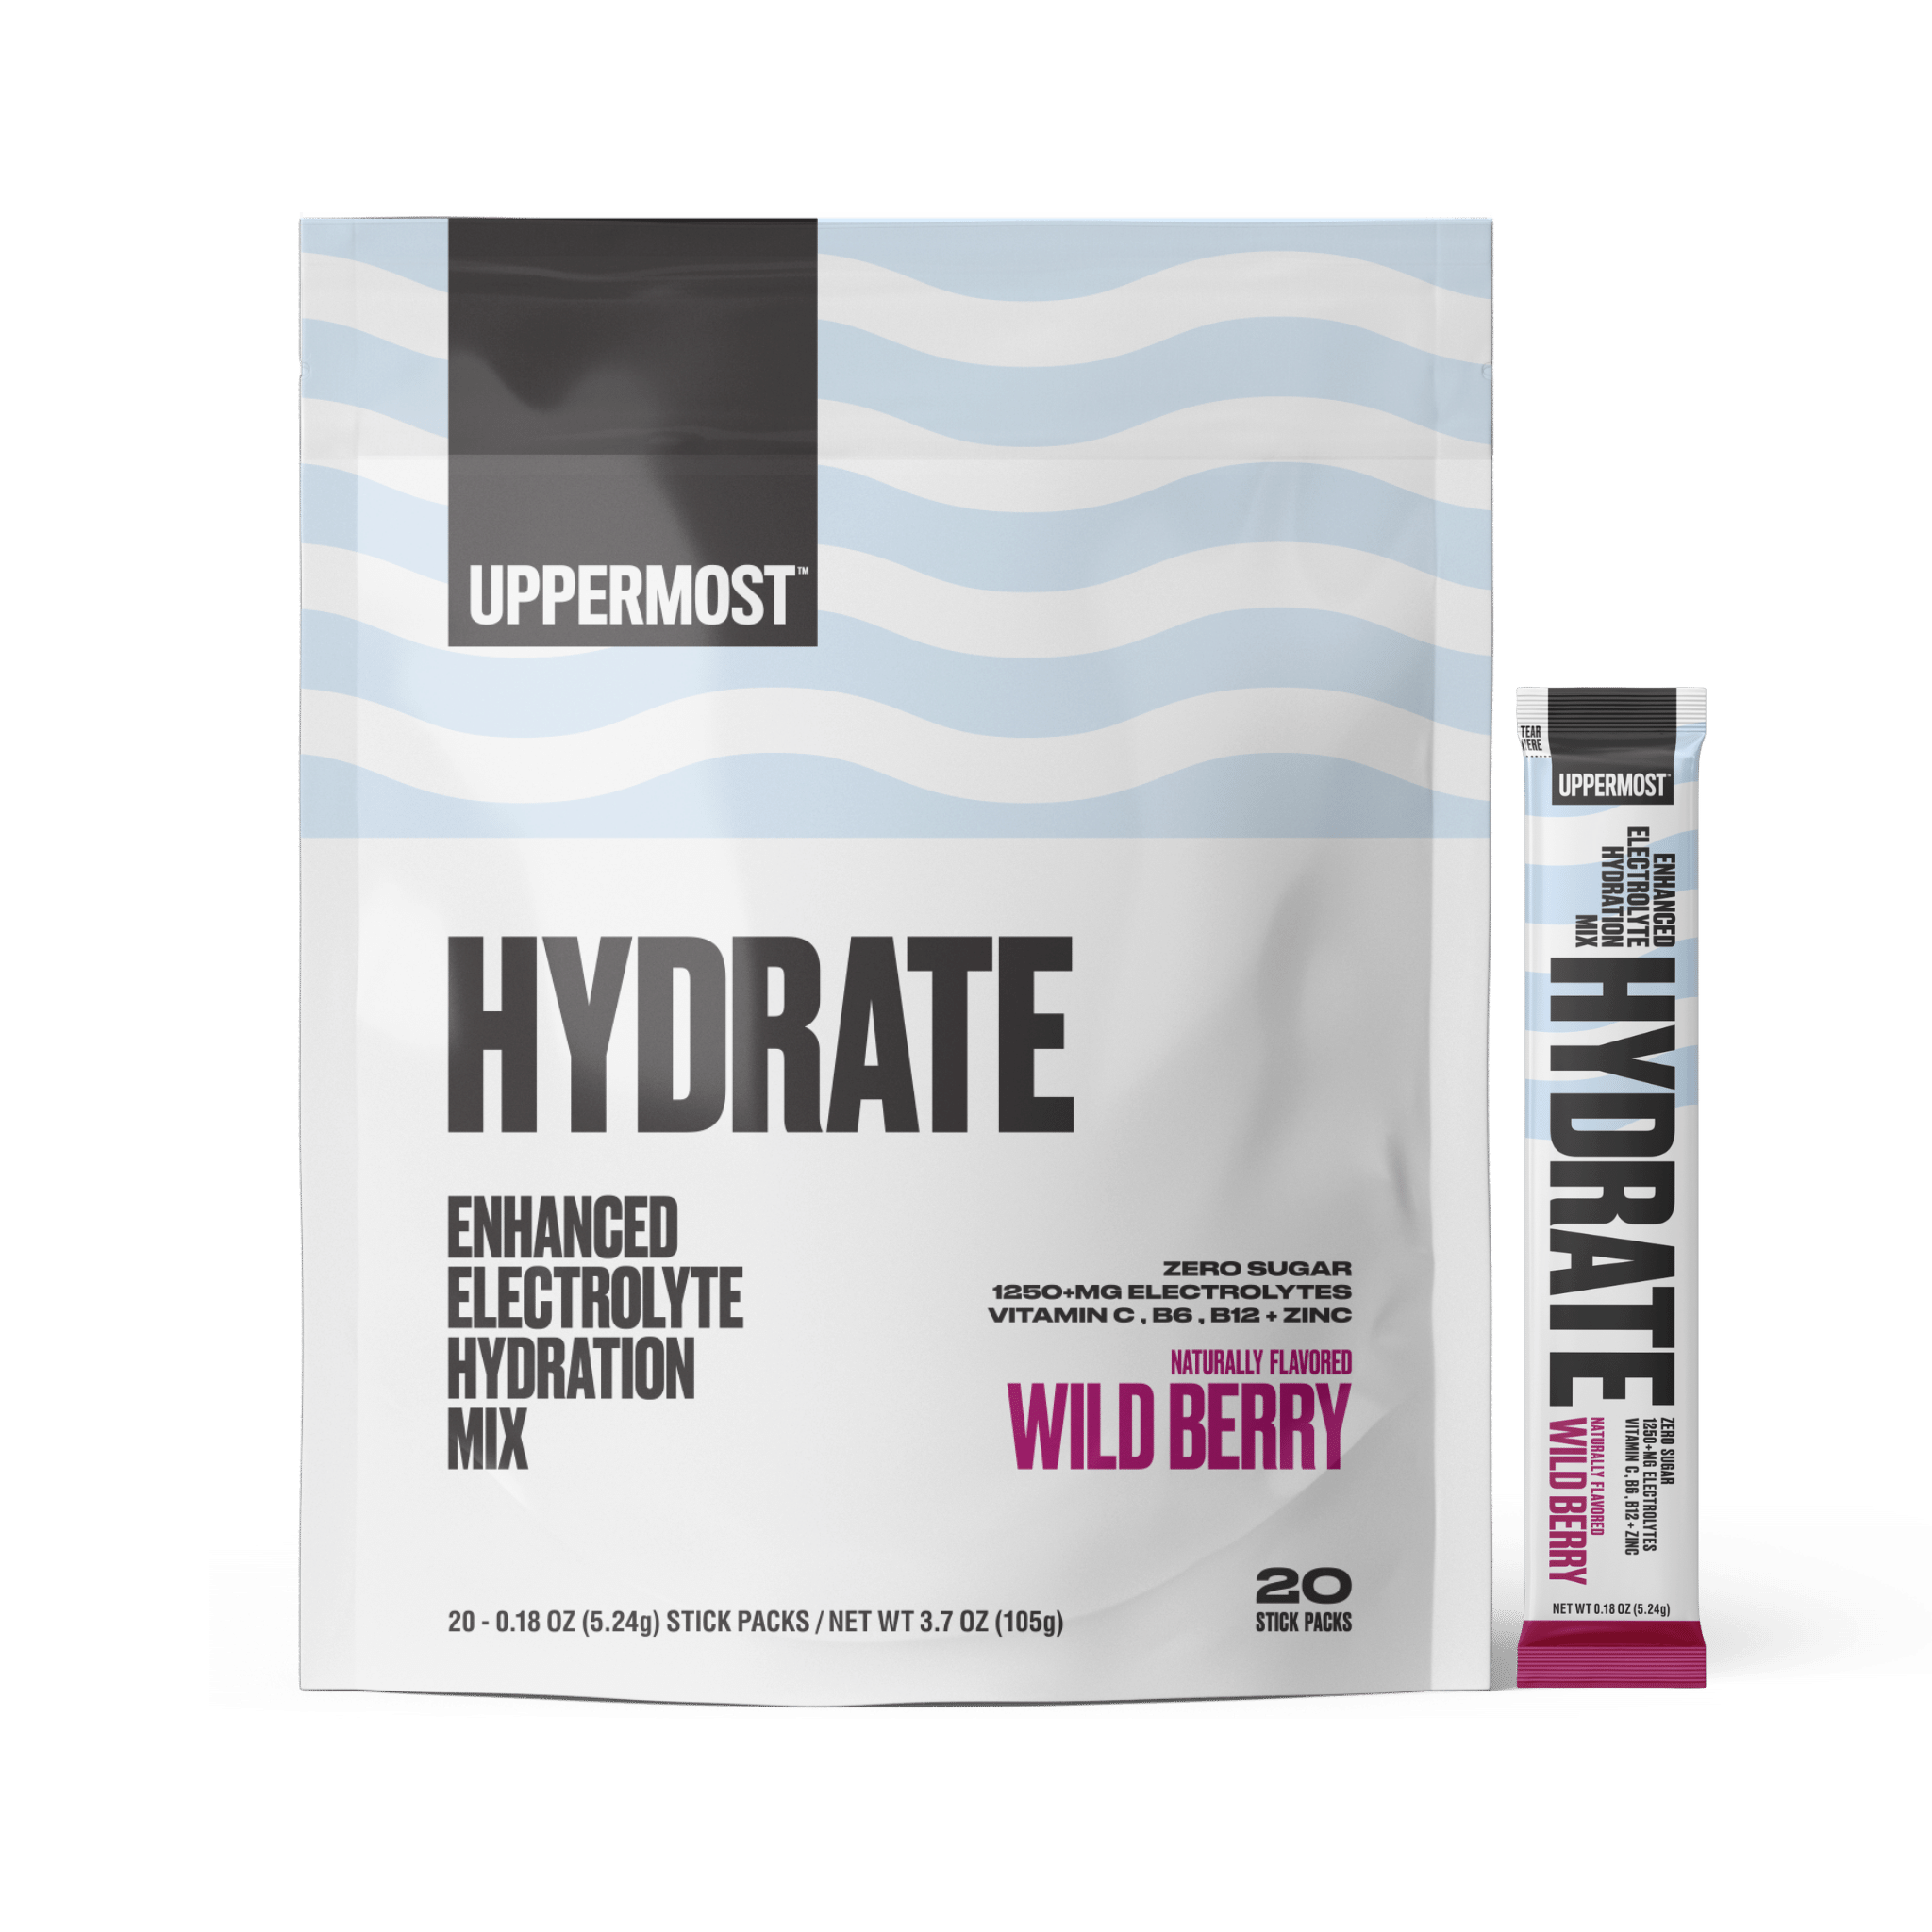 Electrolyte Hydrator